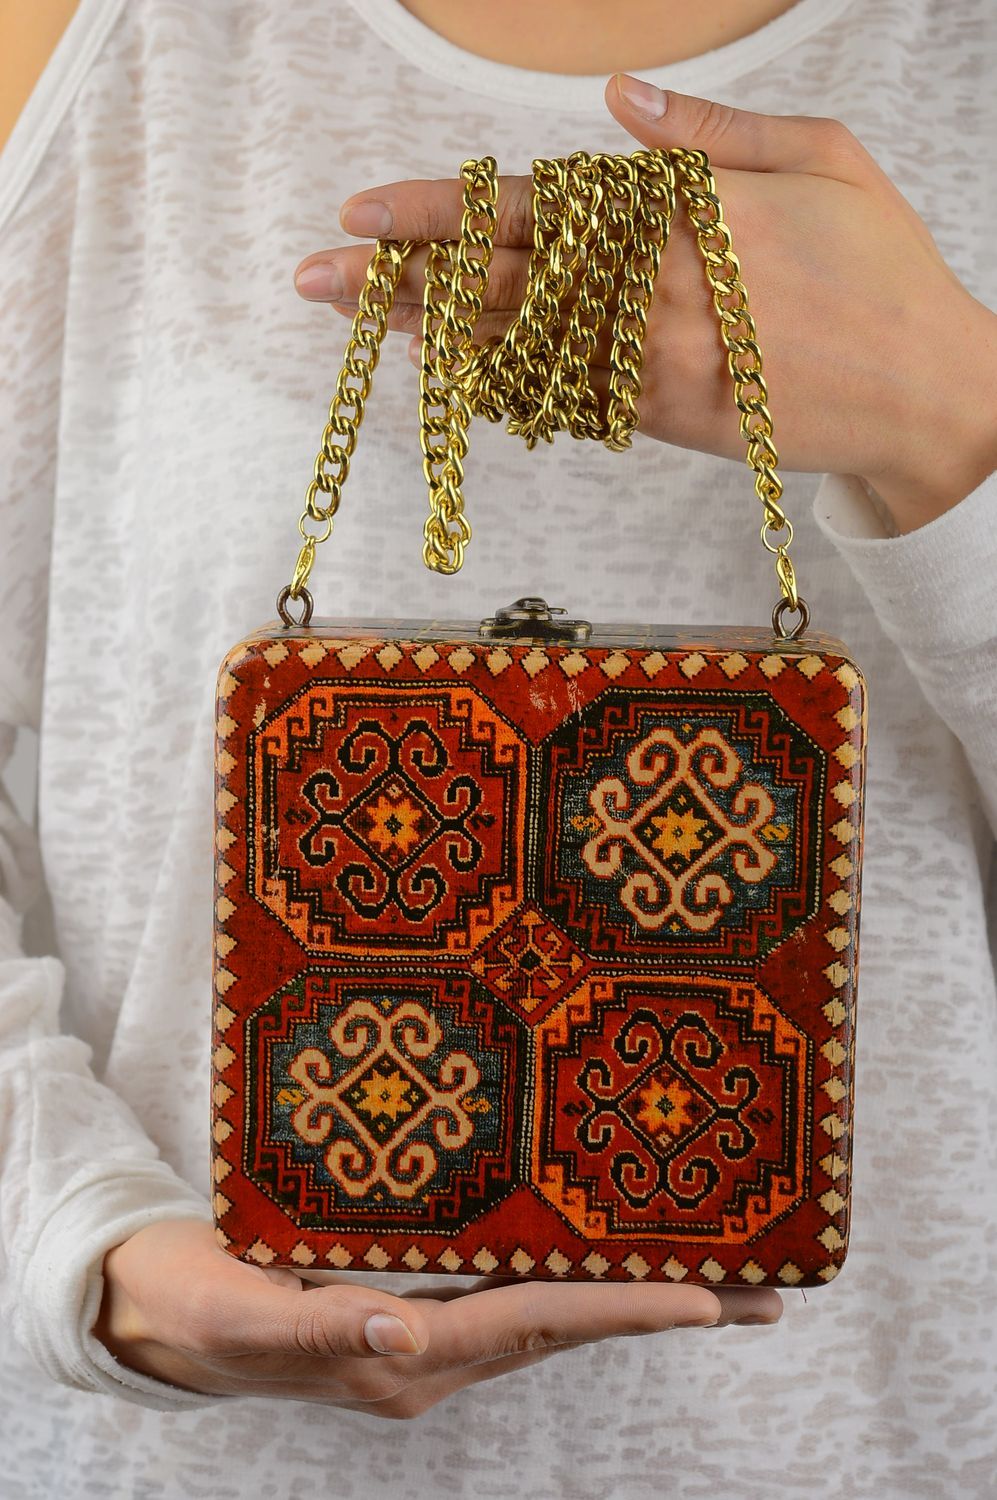 Sling Bag - Aztec Handpainted Sling Bag and Messenger Bag for Women